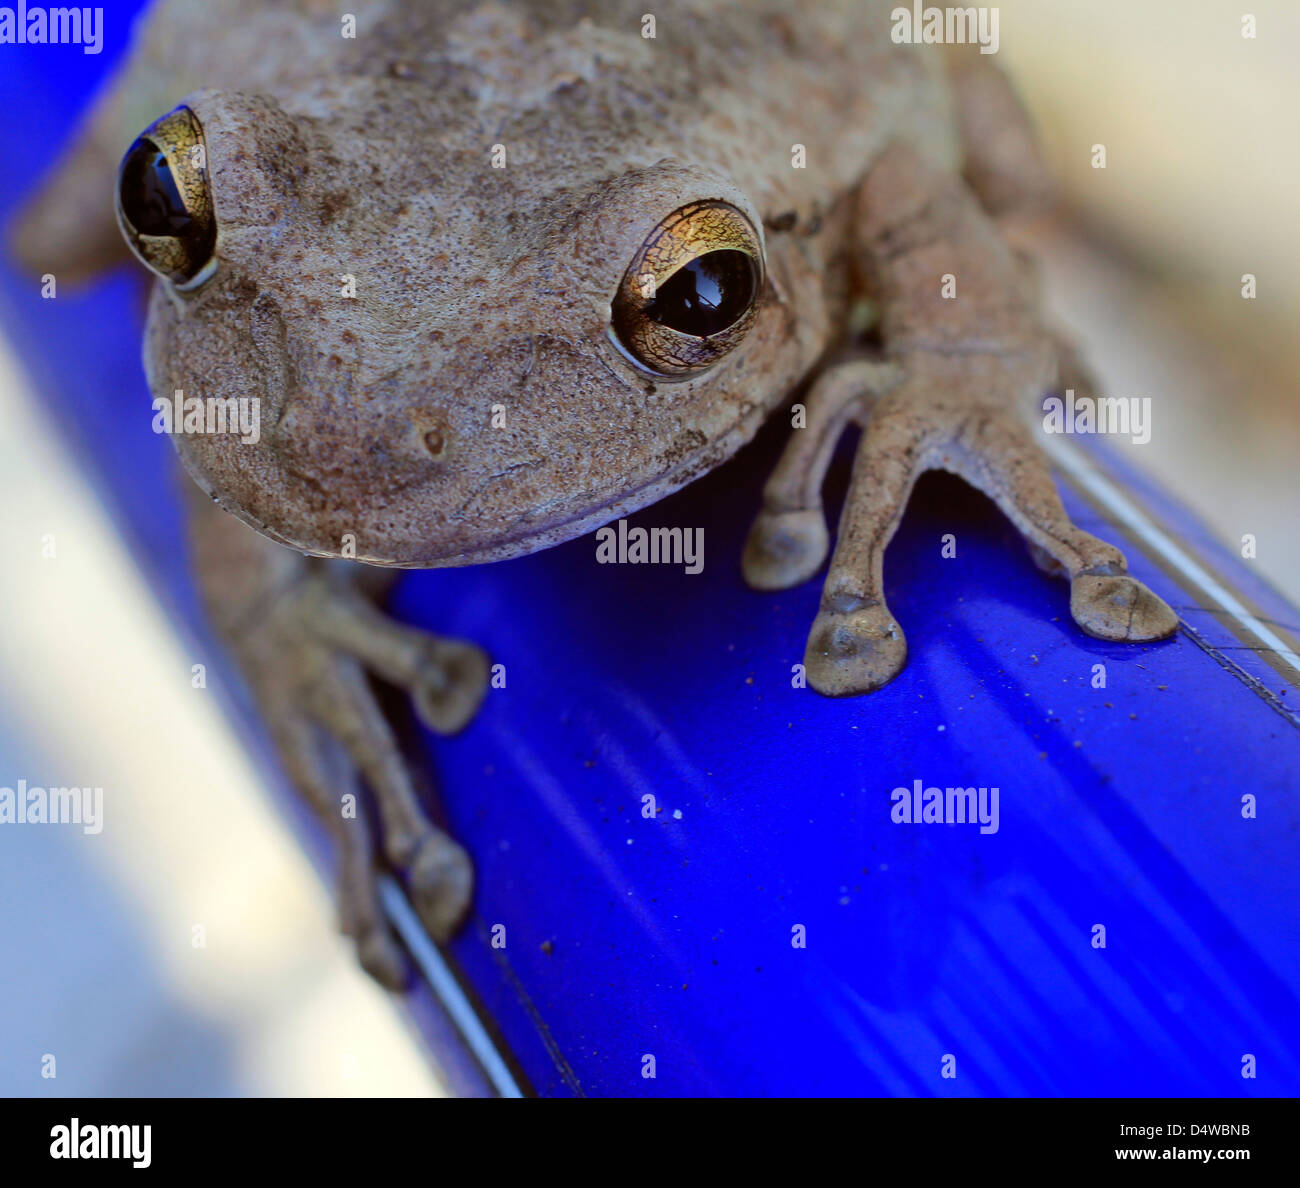 Cuban tree frog on a bright blue metal bar Stock Photo